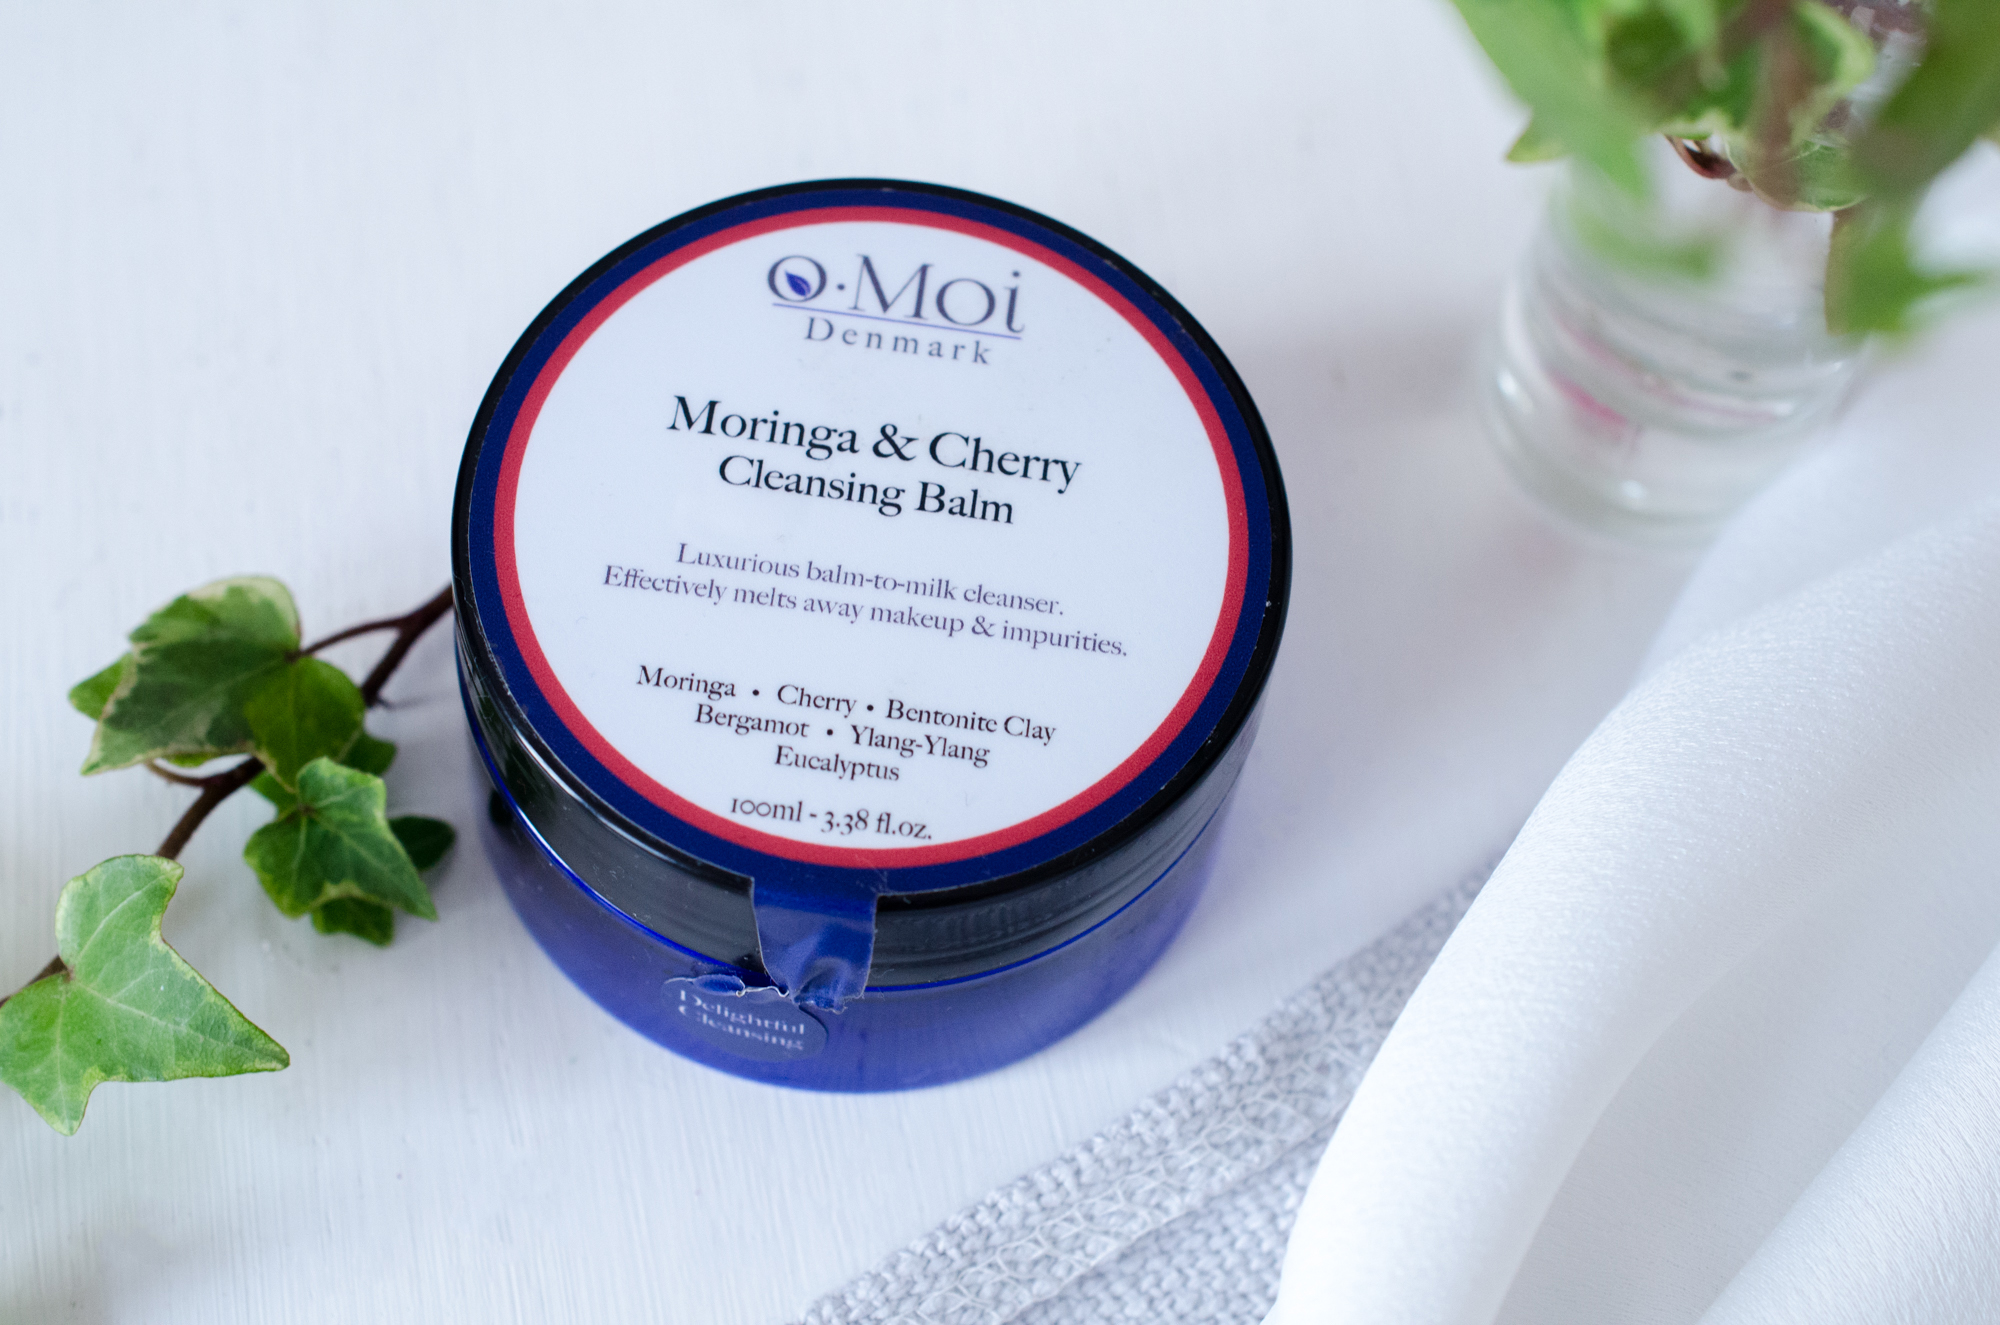 oMoi Moringa & Cherry Cleansing Balm